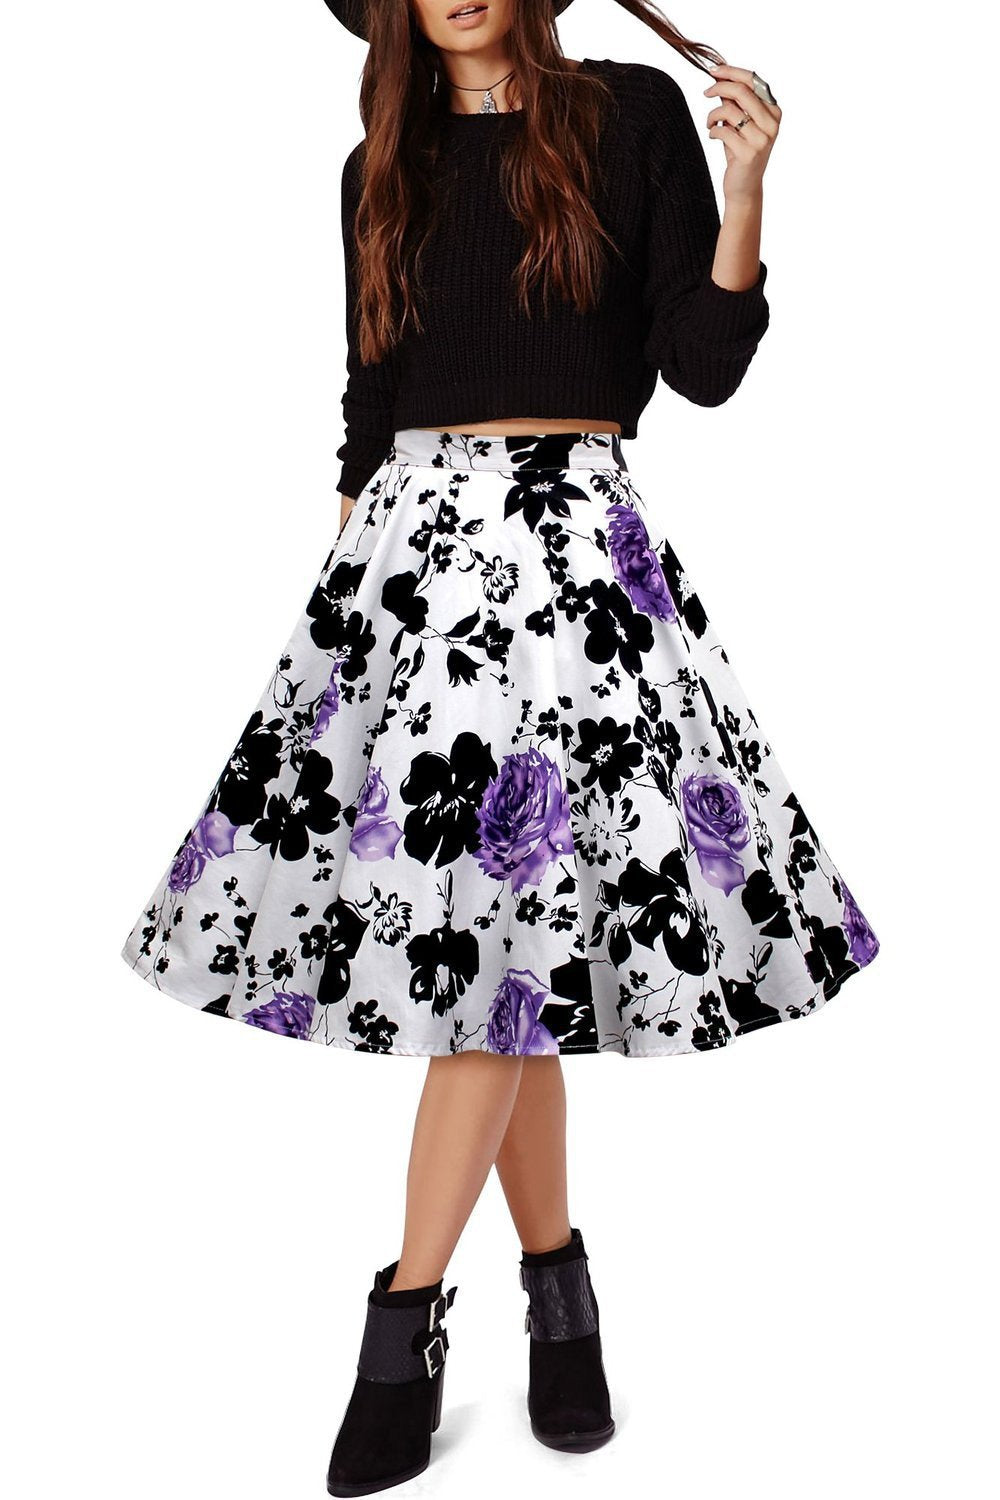 Flower Print A-line Flared Pleated High Waist Knee-length Skirt - Meet Yours Fashion - 6